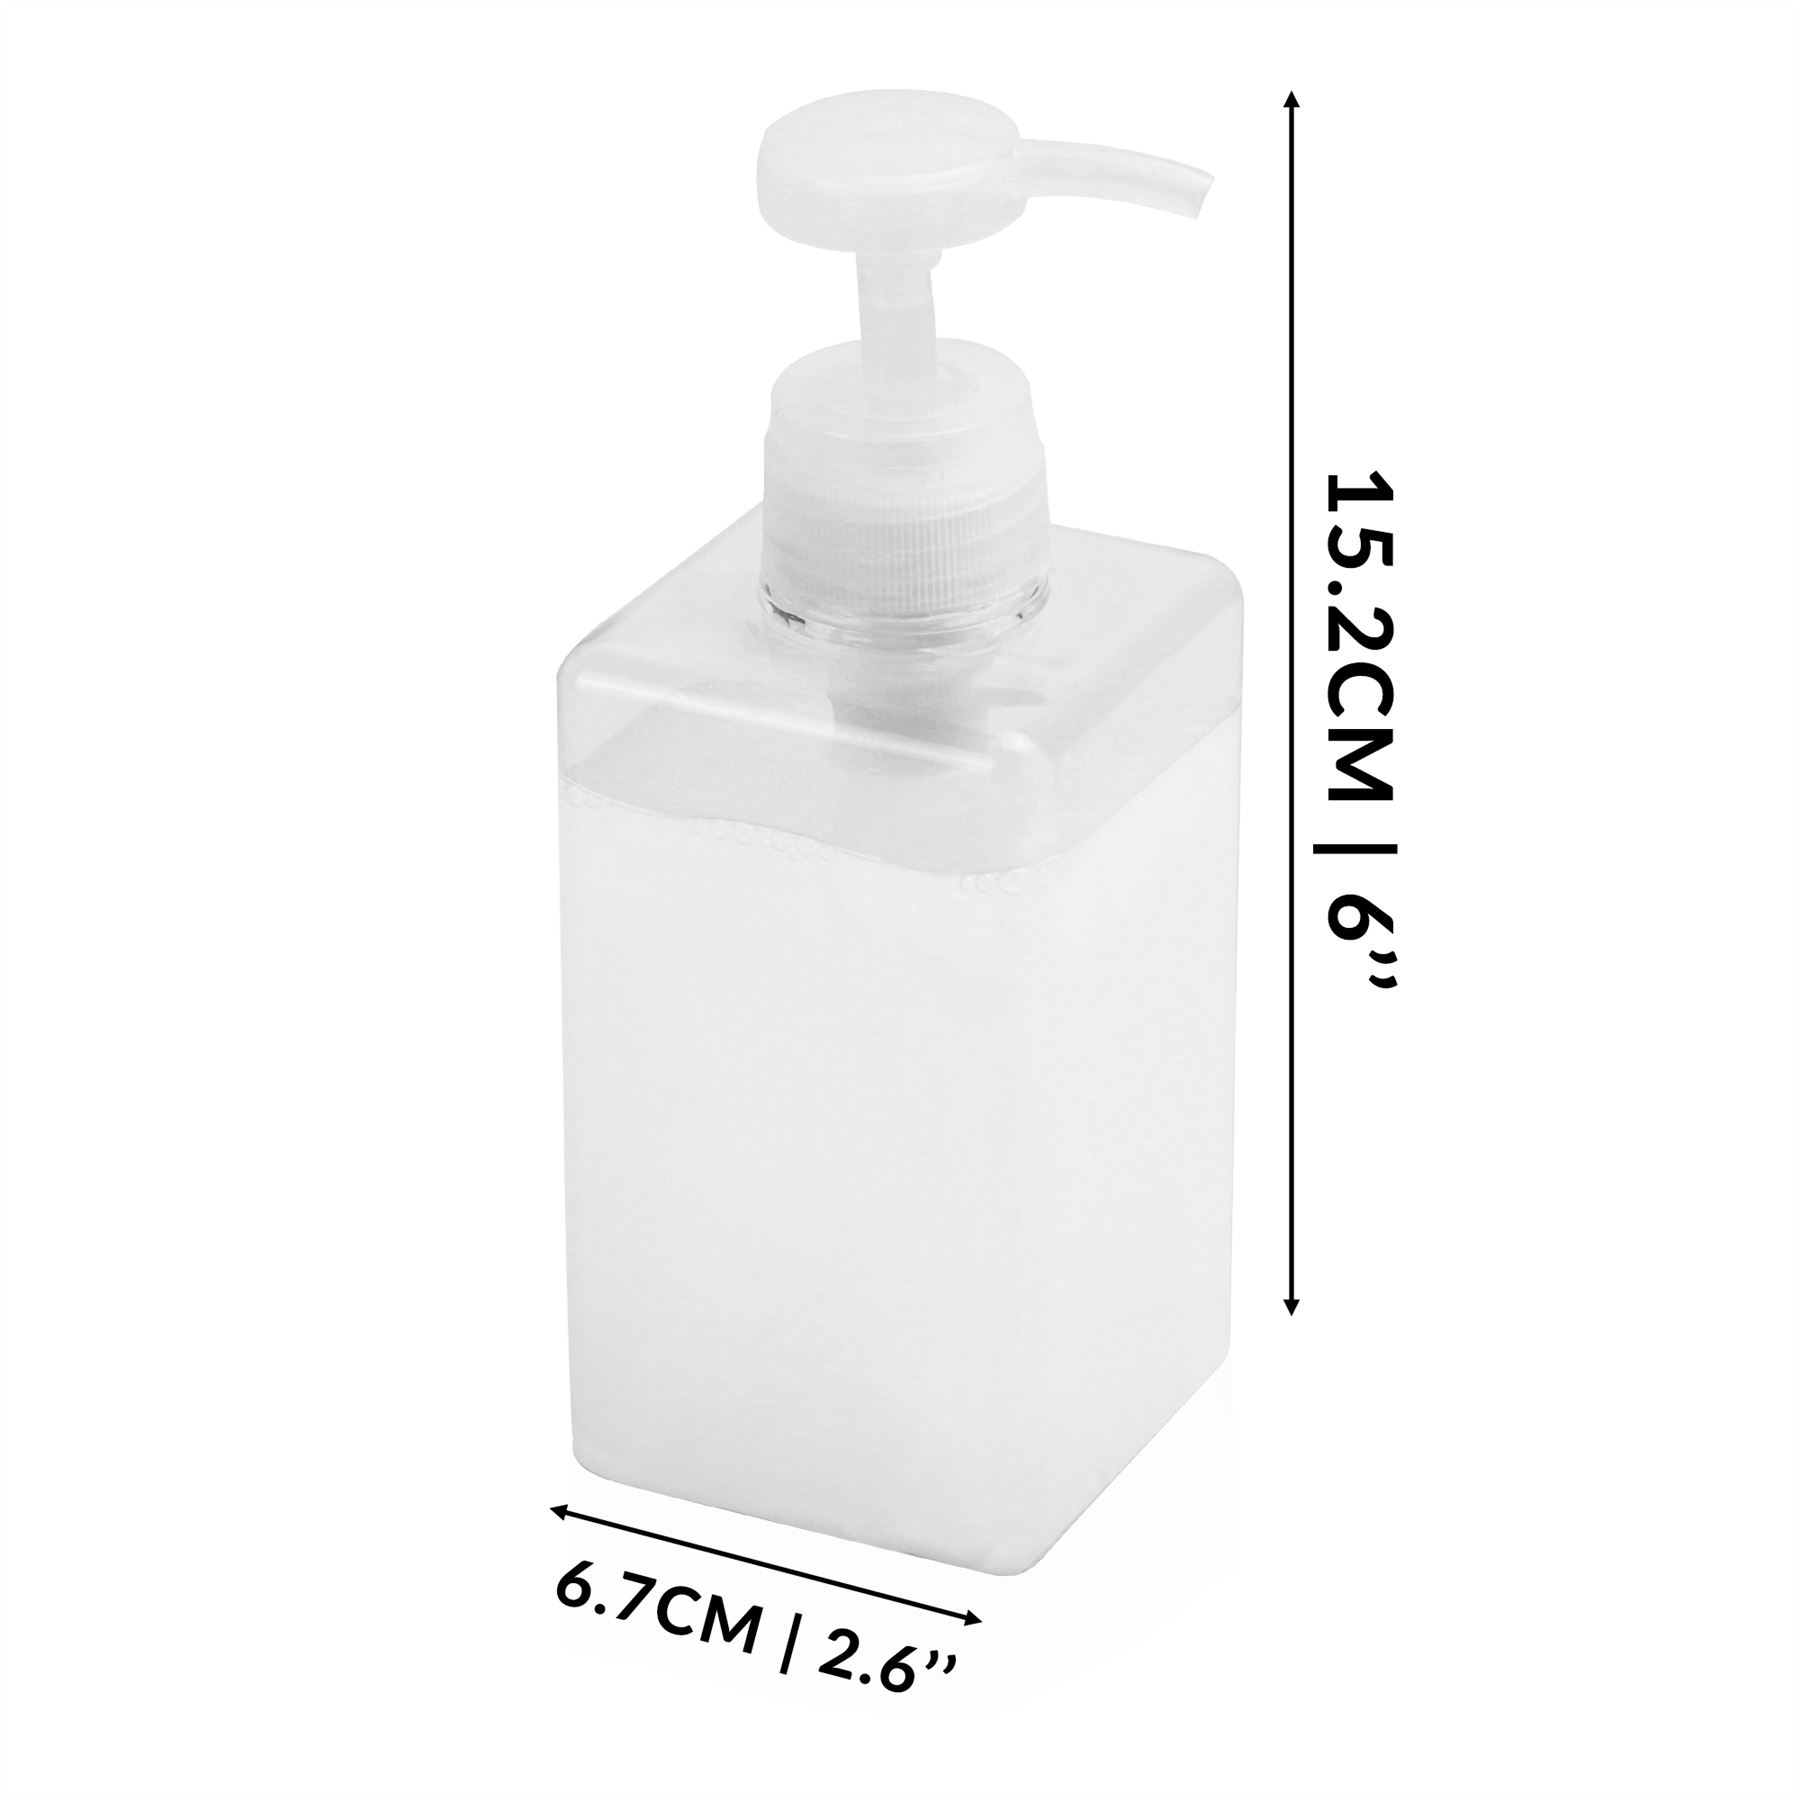 Soap Dispenser - Set of 2 | Pukkr